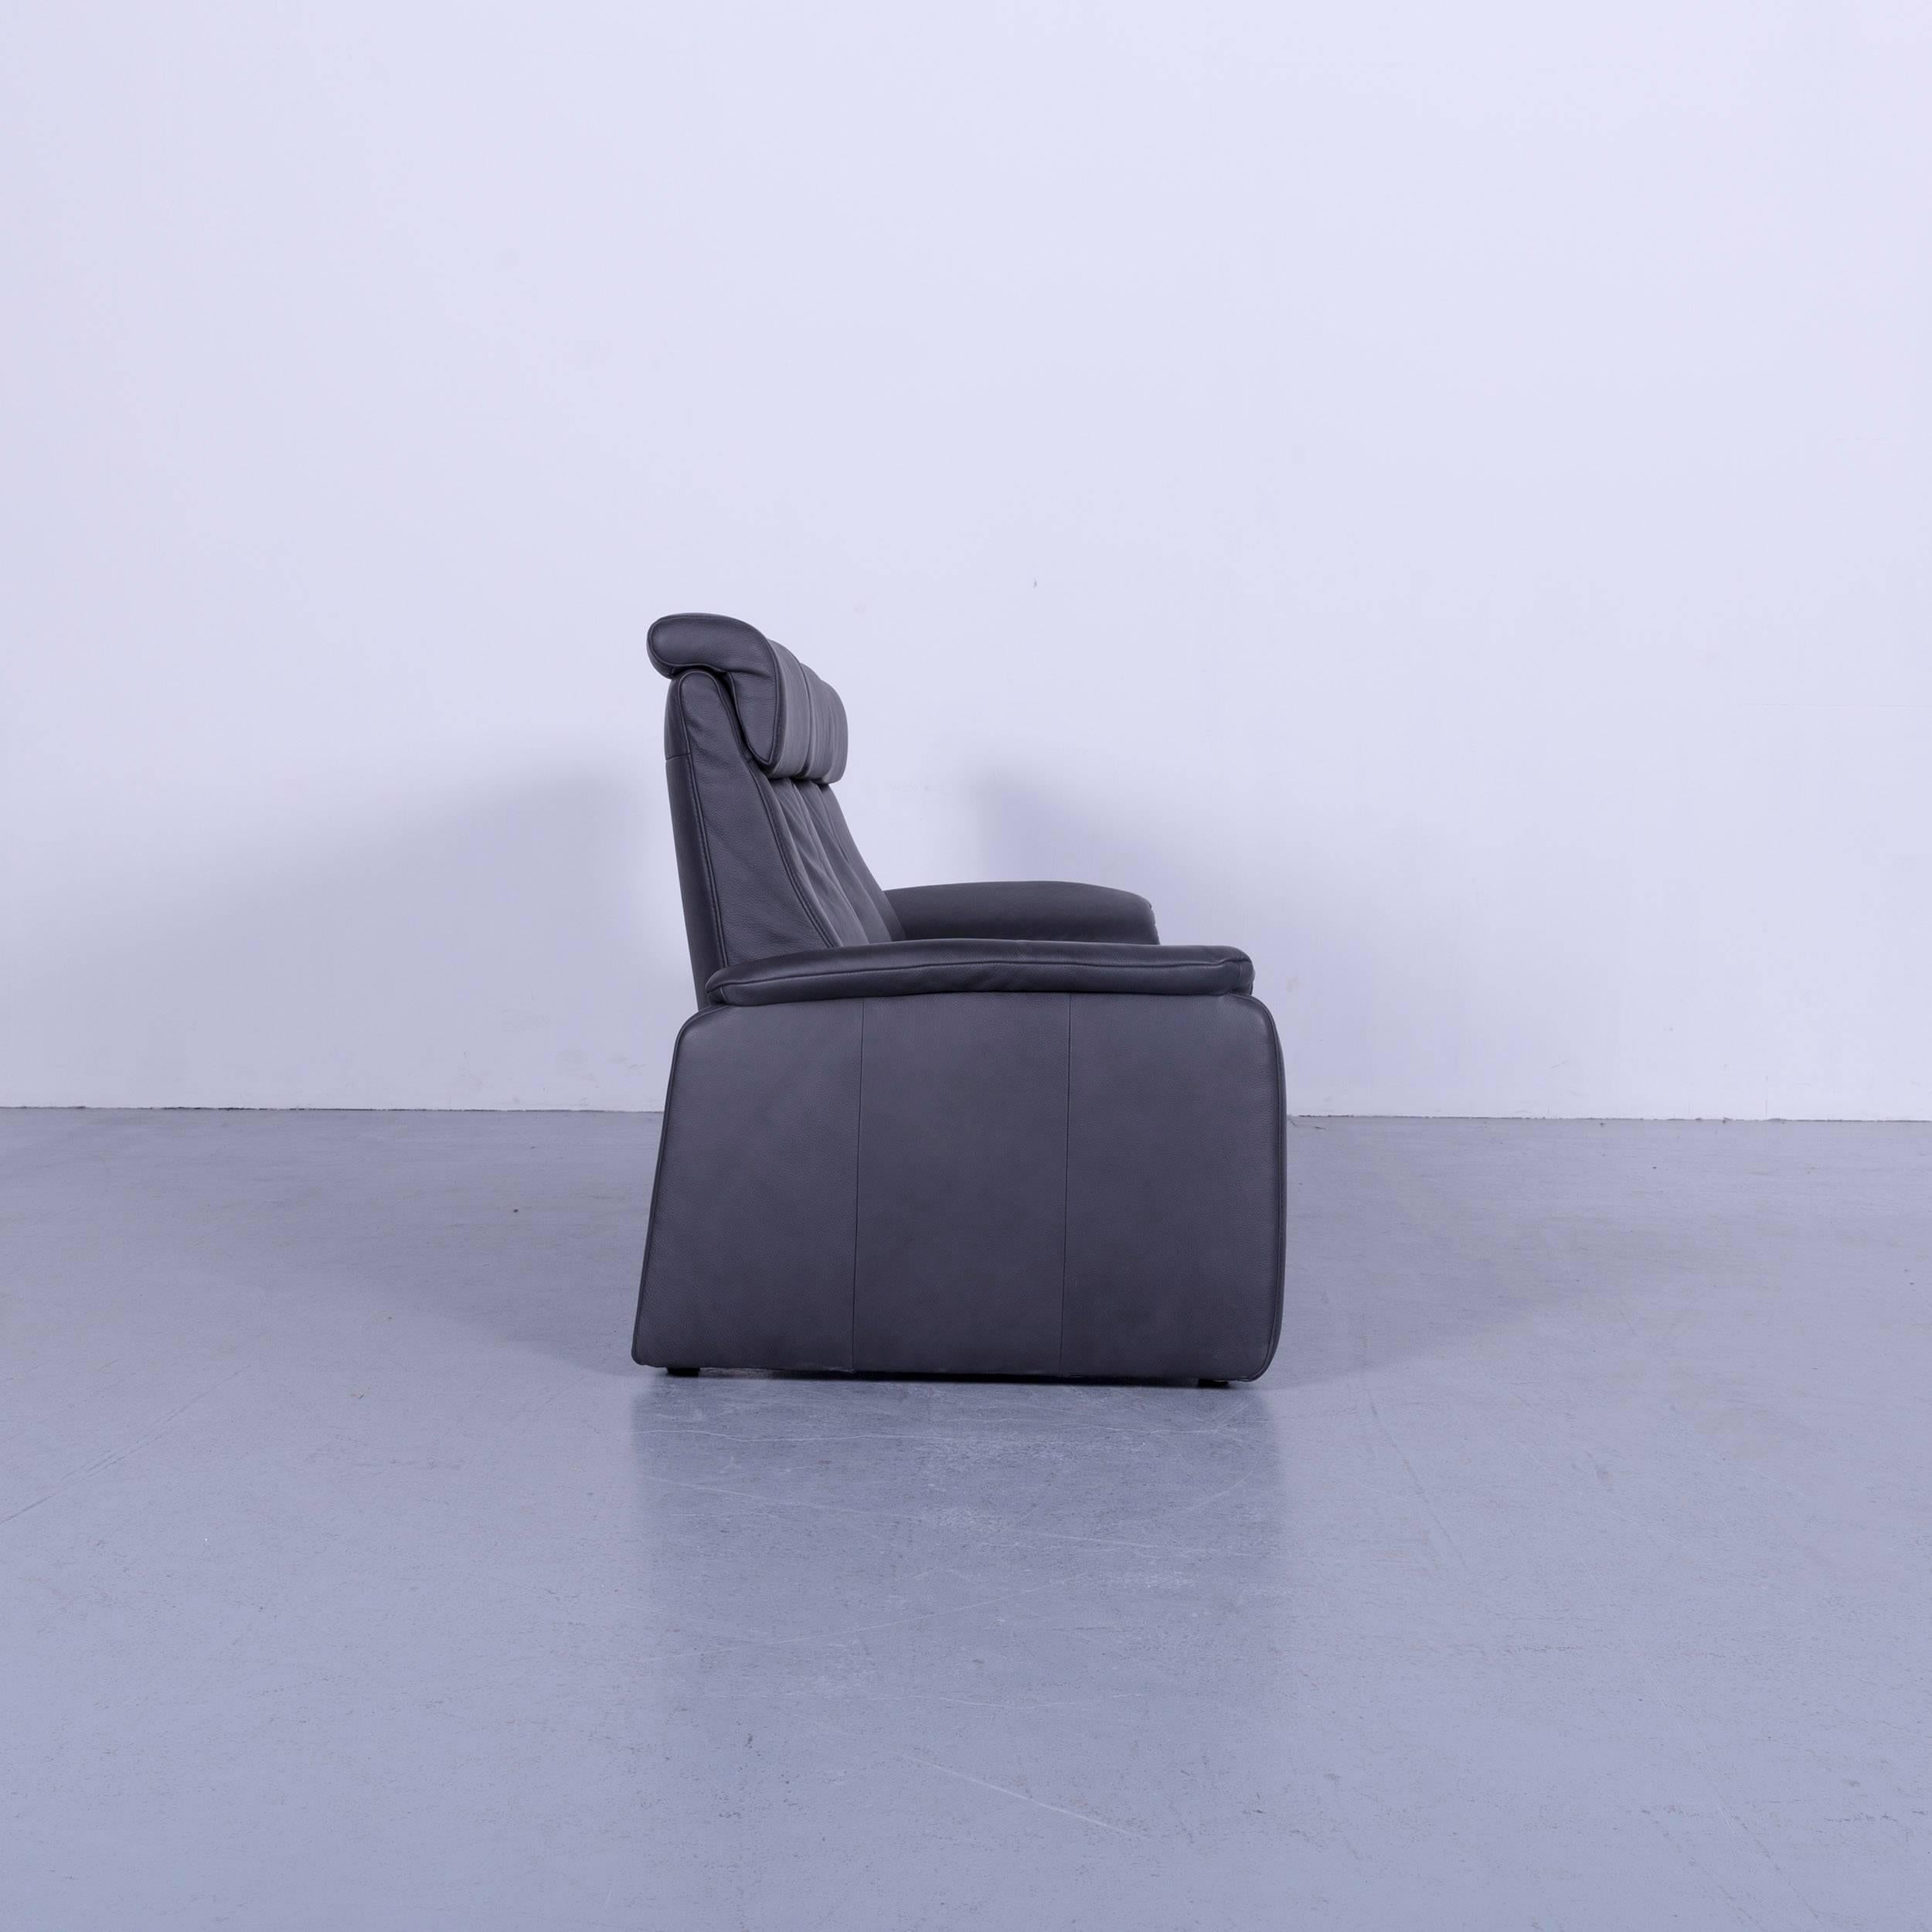 Himolla Leather Sofa Black Three-Seat Couch 2